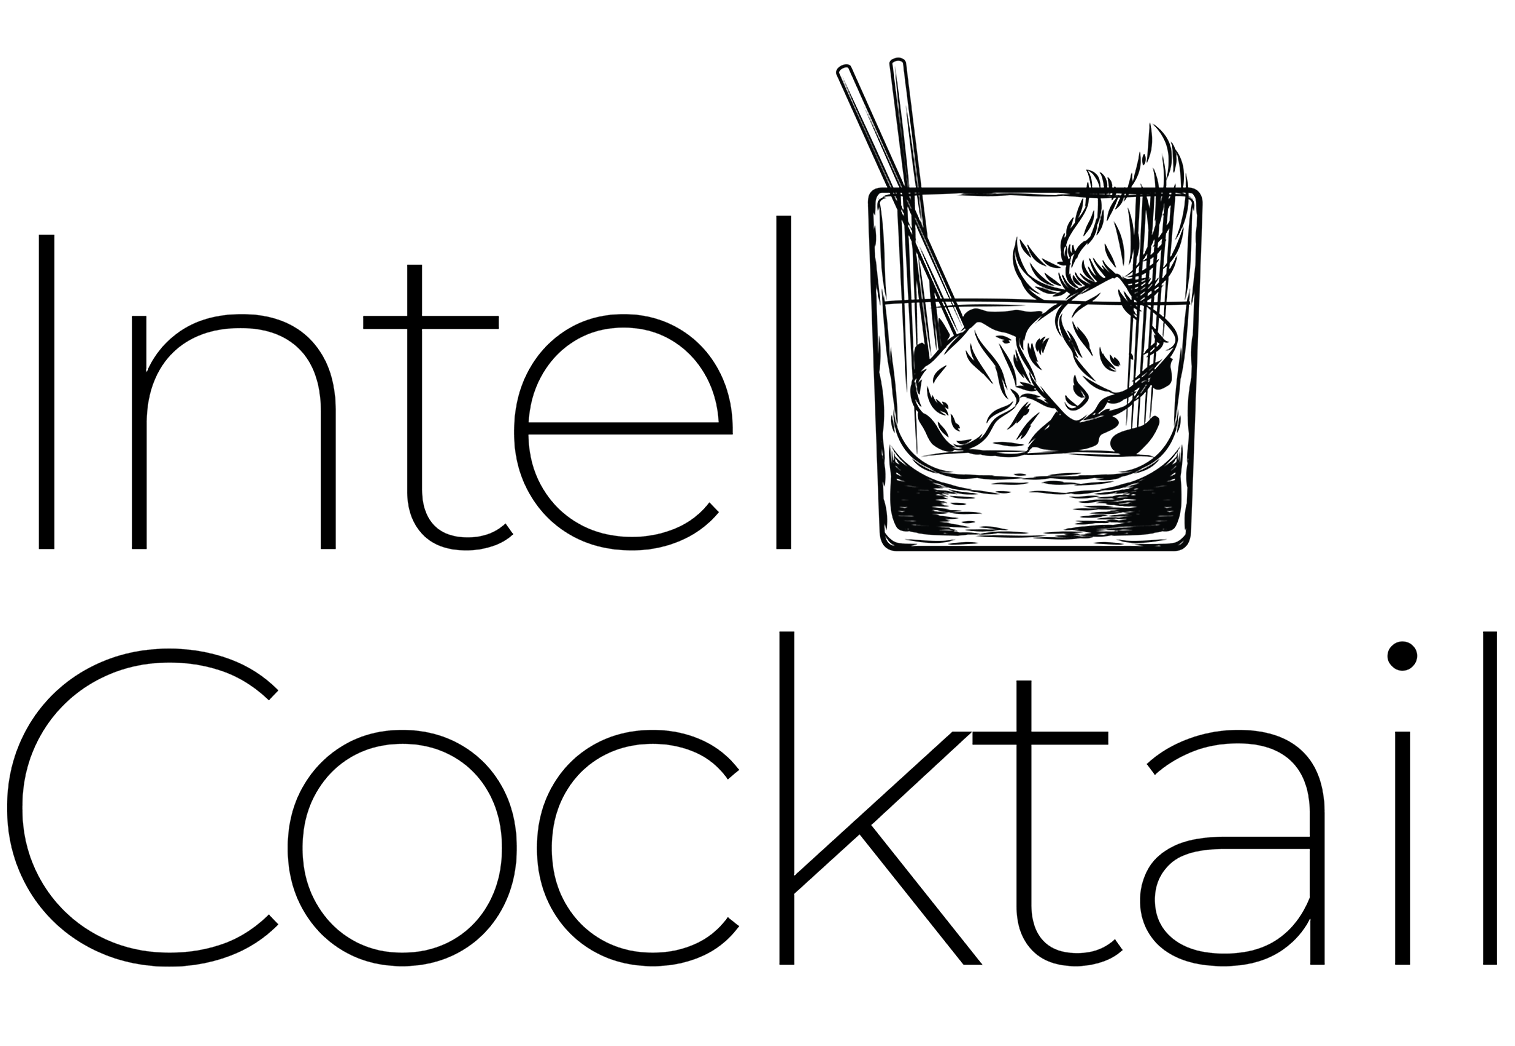 Intel Cocktail